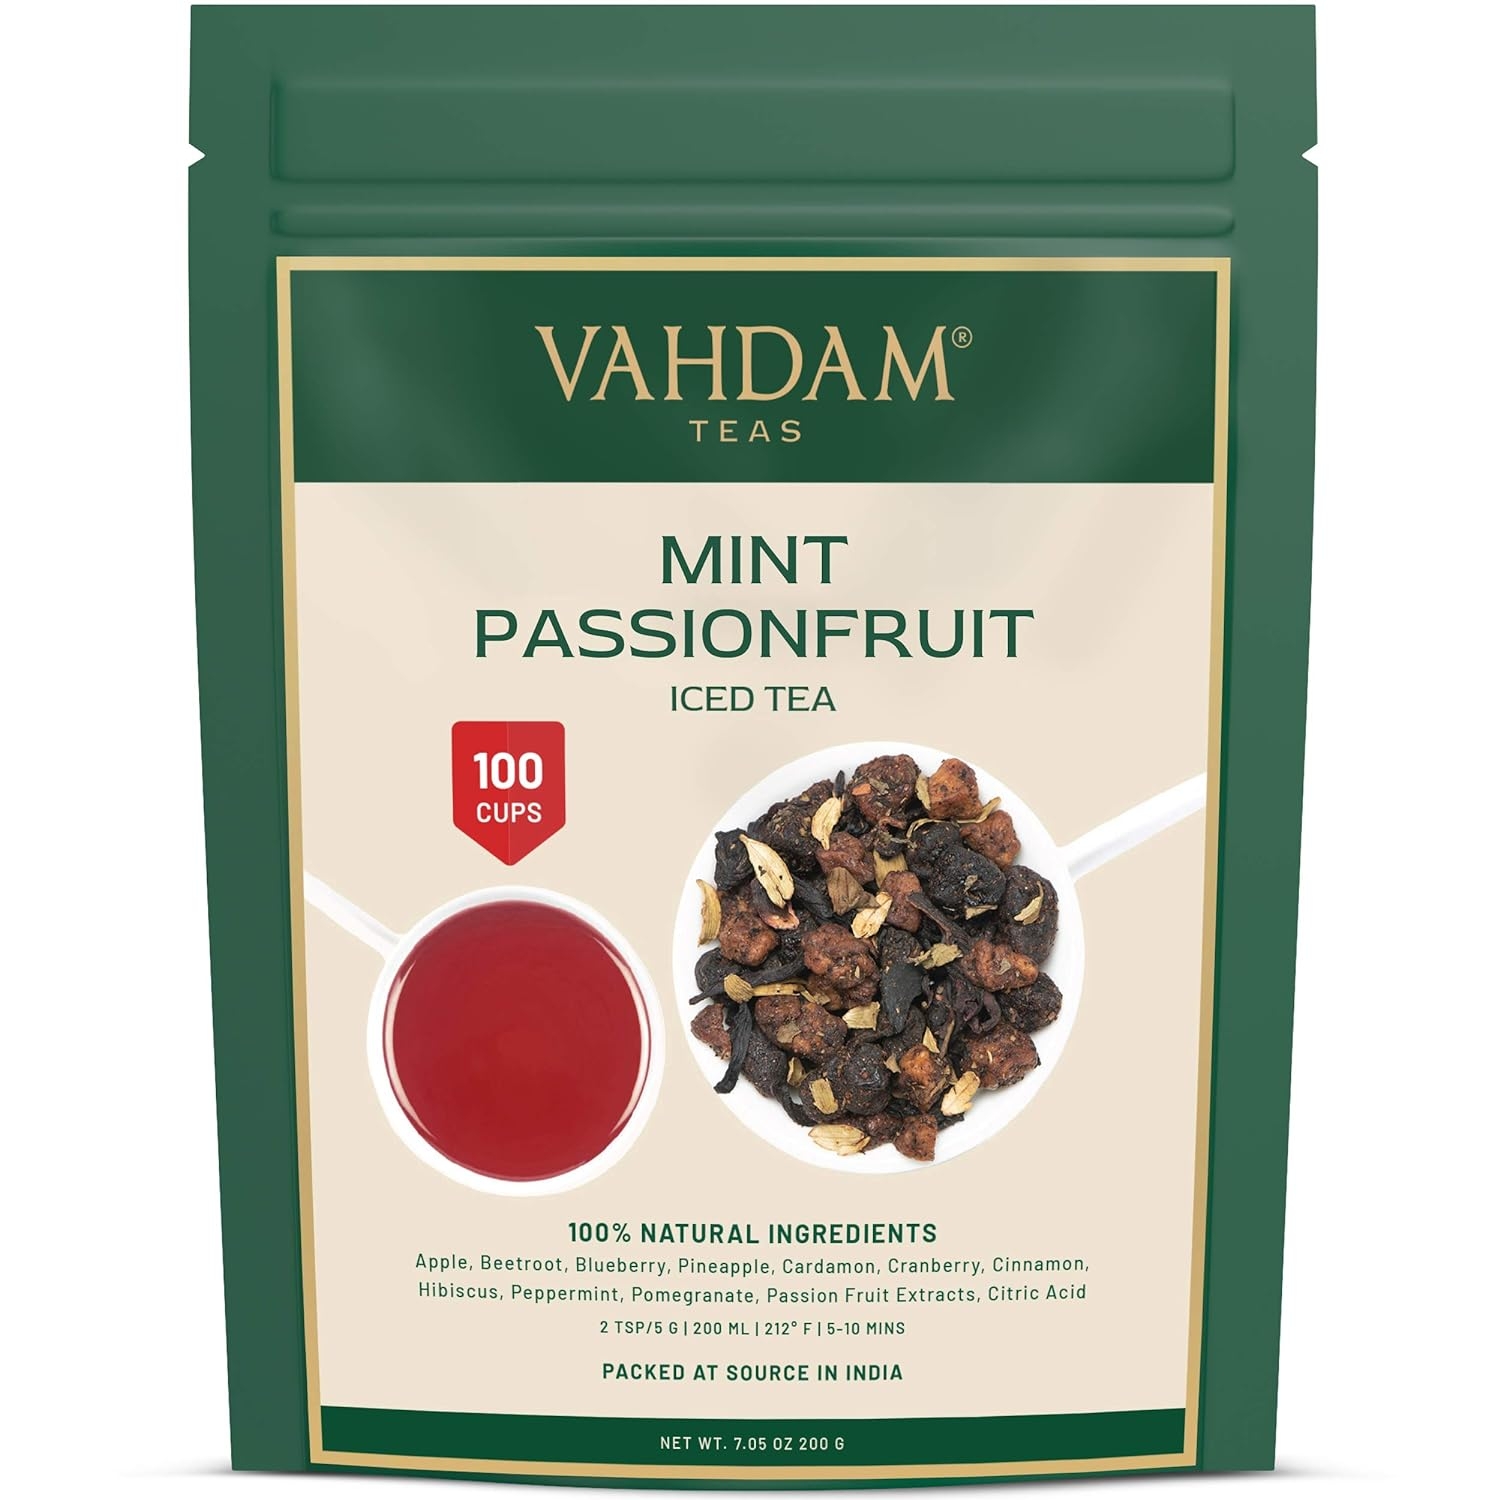 Mint Passiofruit Iced Tea